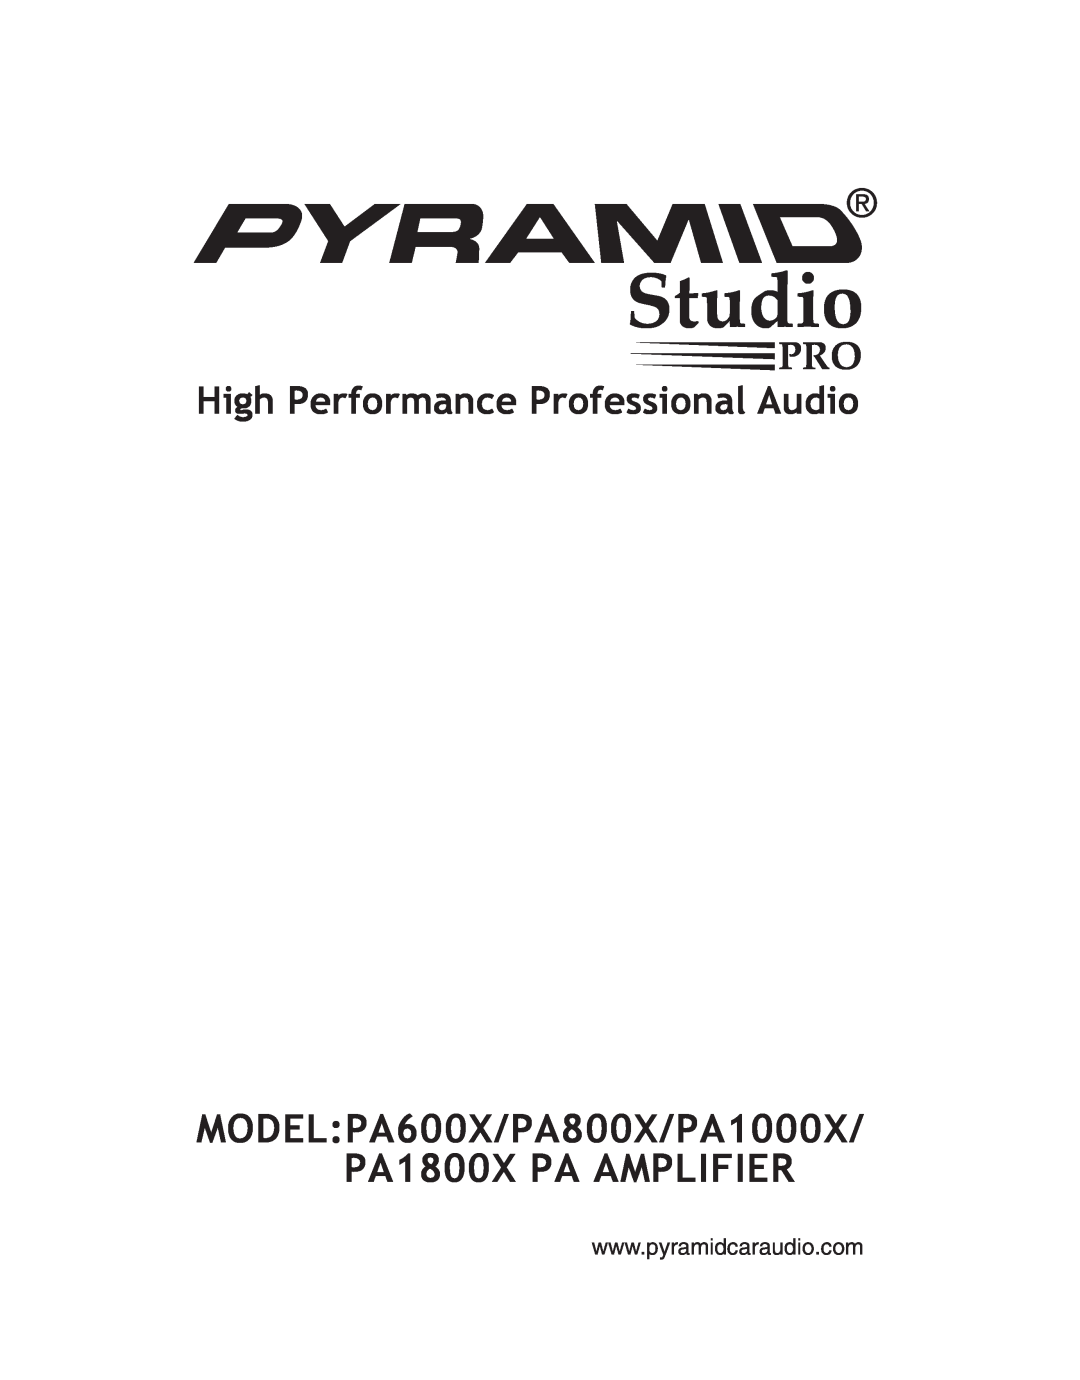 Pyramid Car Audio manual Studio, MODEL PA600X/PA800X/PA1000X/ PA1800X PA AMPLIFIER, High Performance Professional Audio 